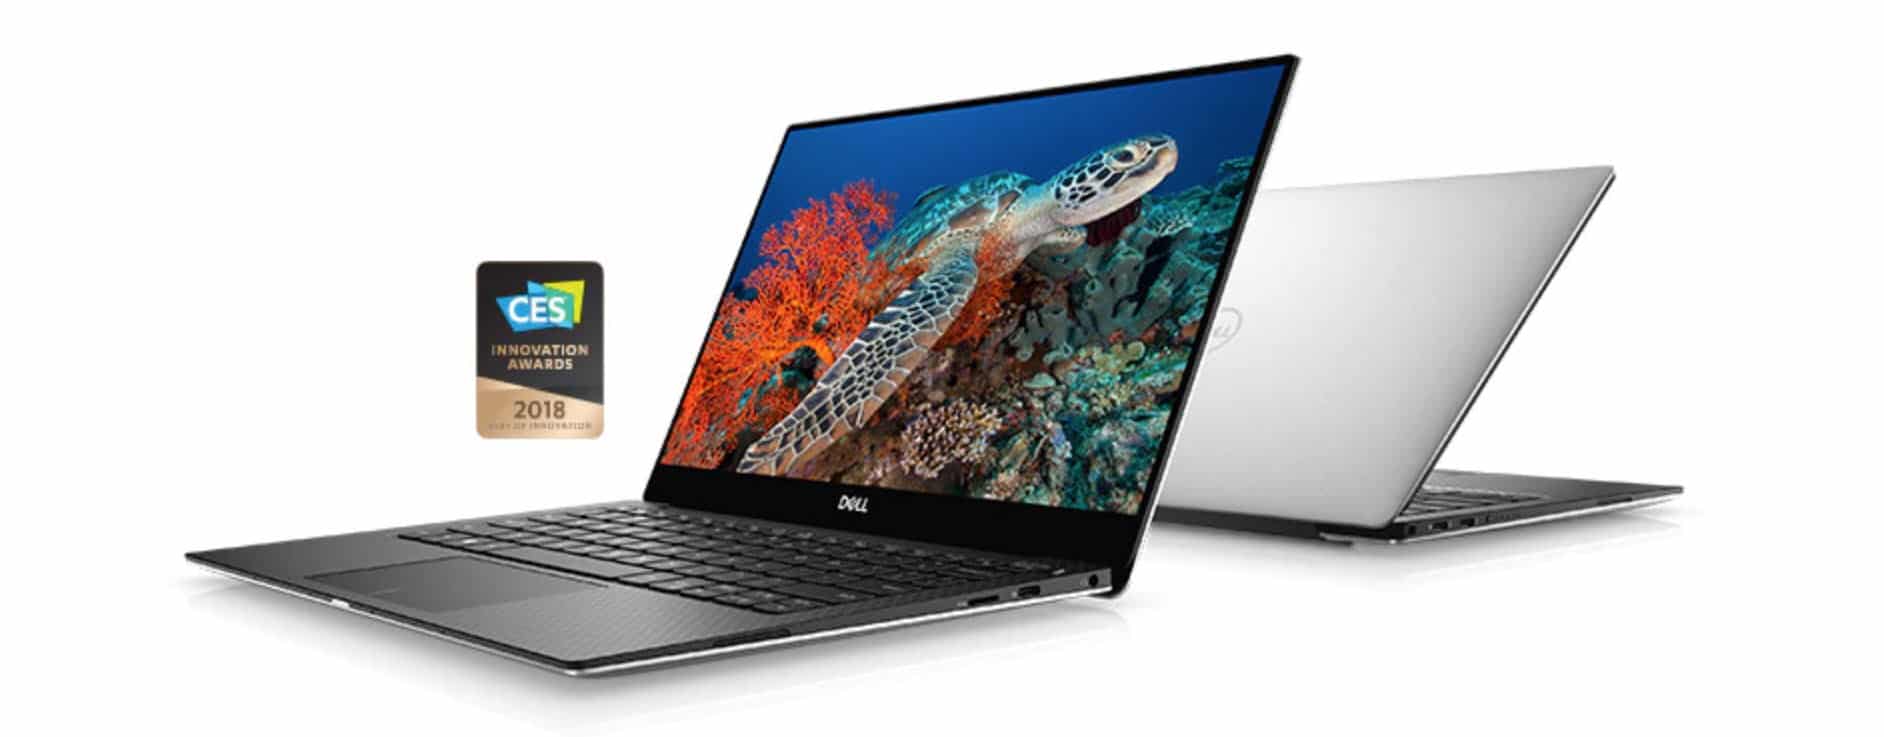 Gear Review A Photographers Take Dell Xps 13 9370 Quad Core Laptop